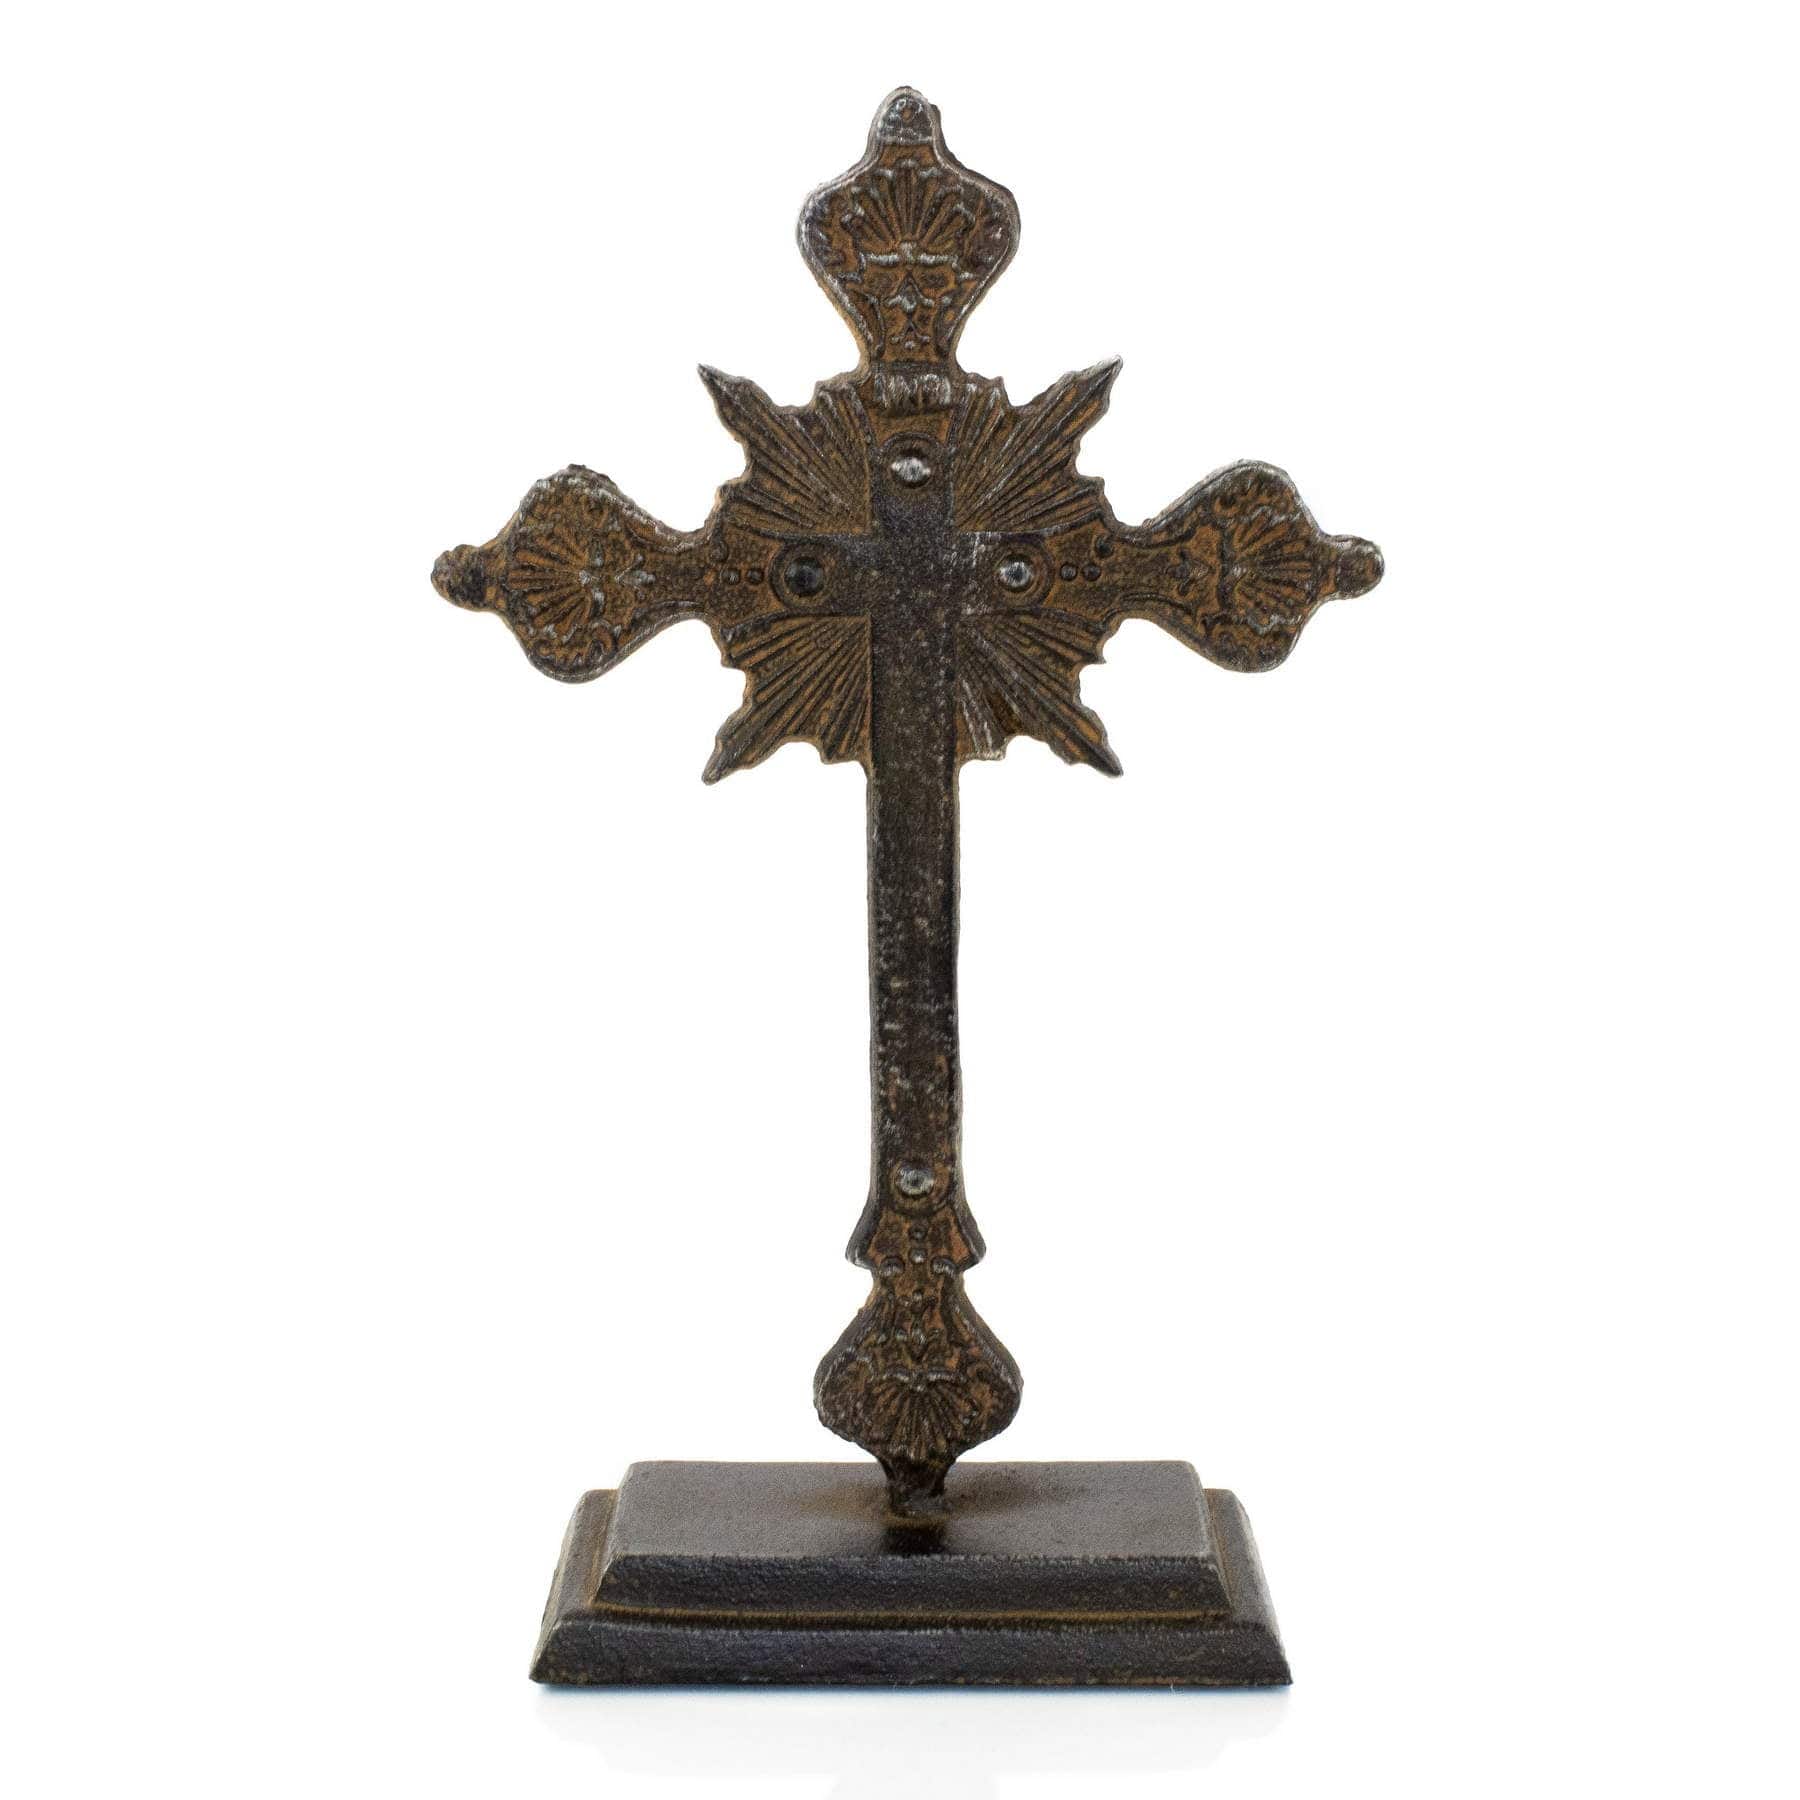 Textured Metal Crosses Elevate Home Decor - Sculptures & Statues